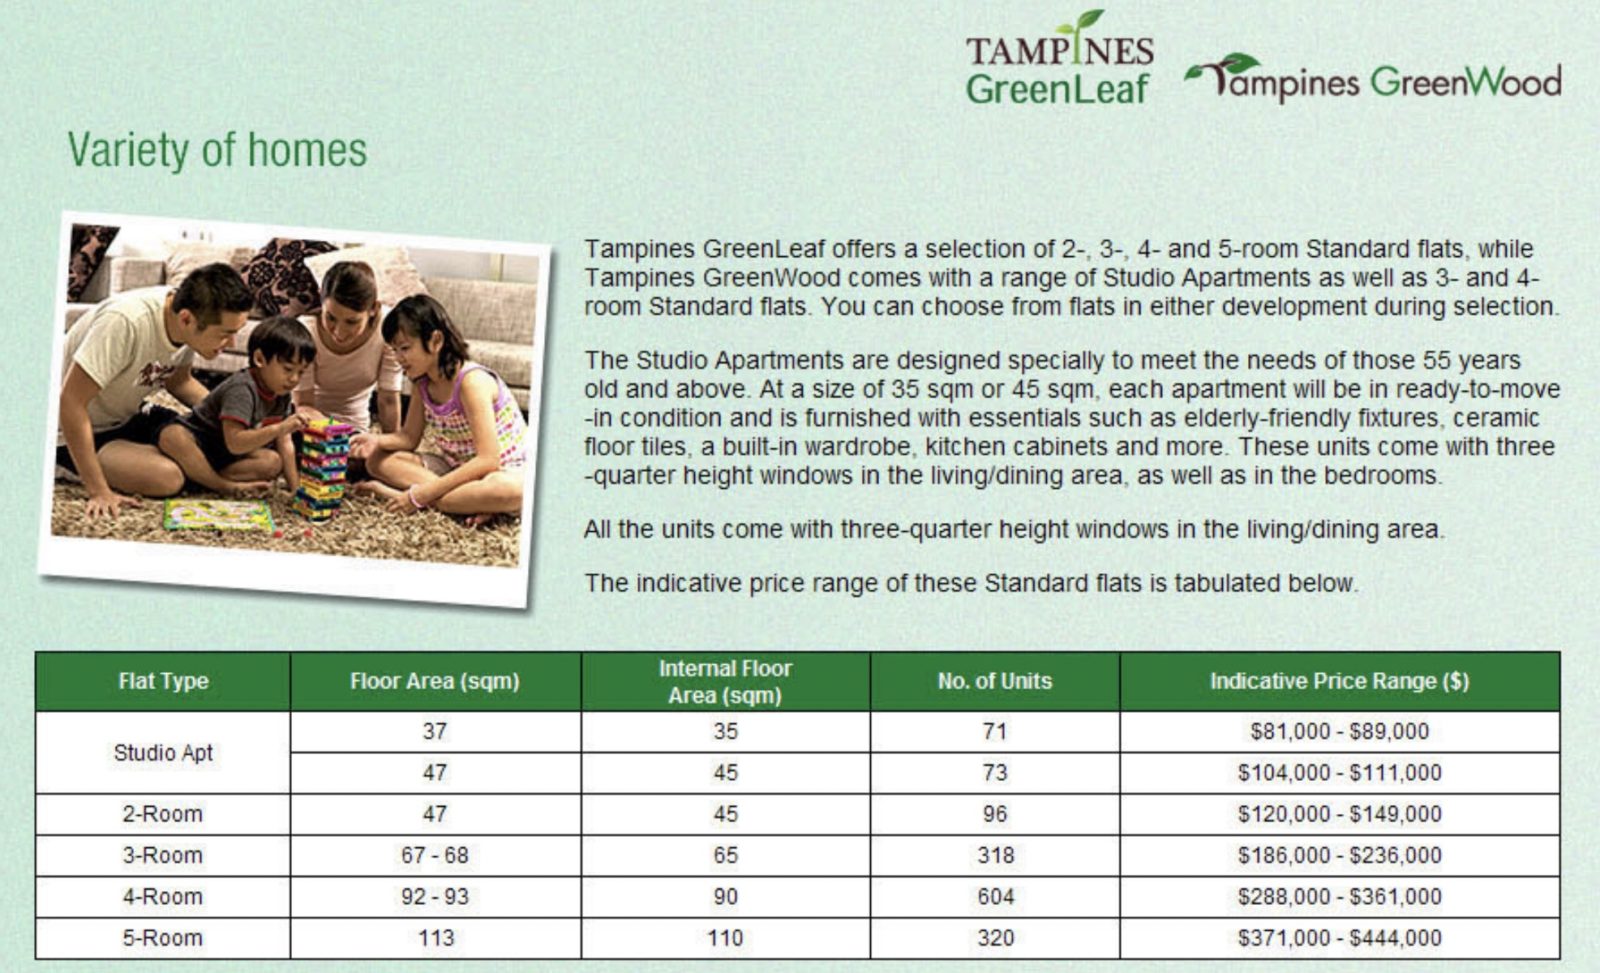 Tampines Greenleaf Greenwood pricing